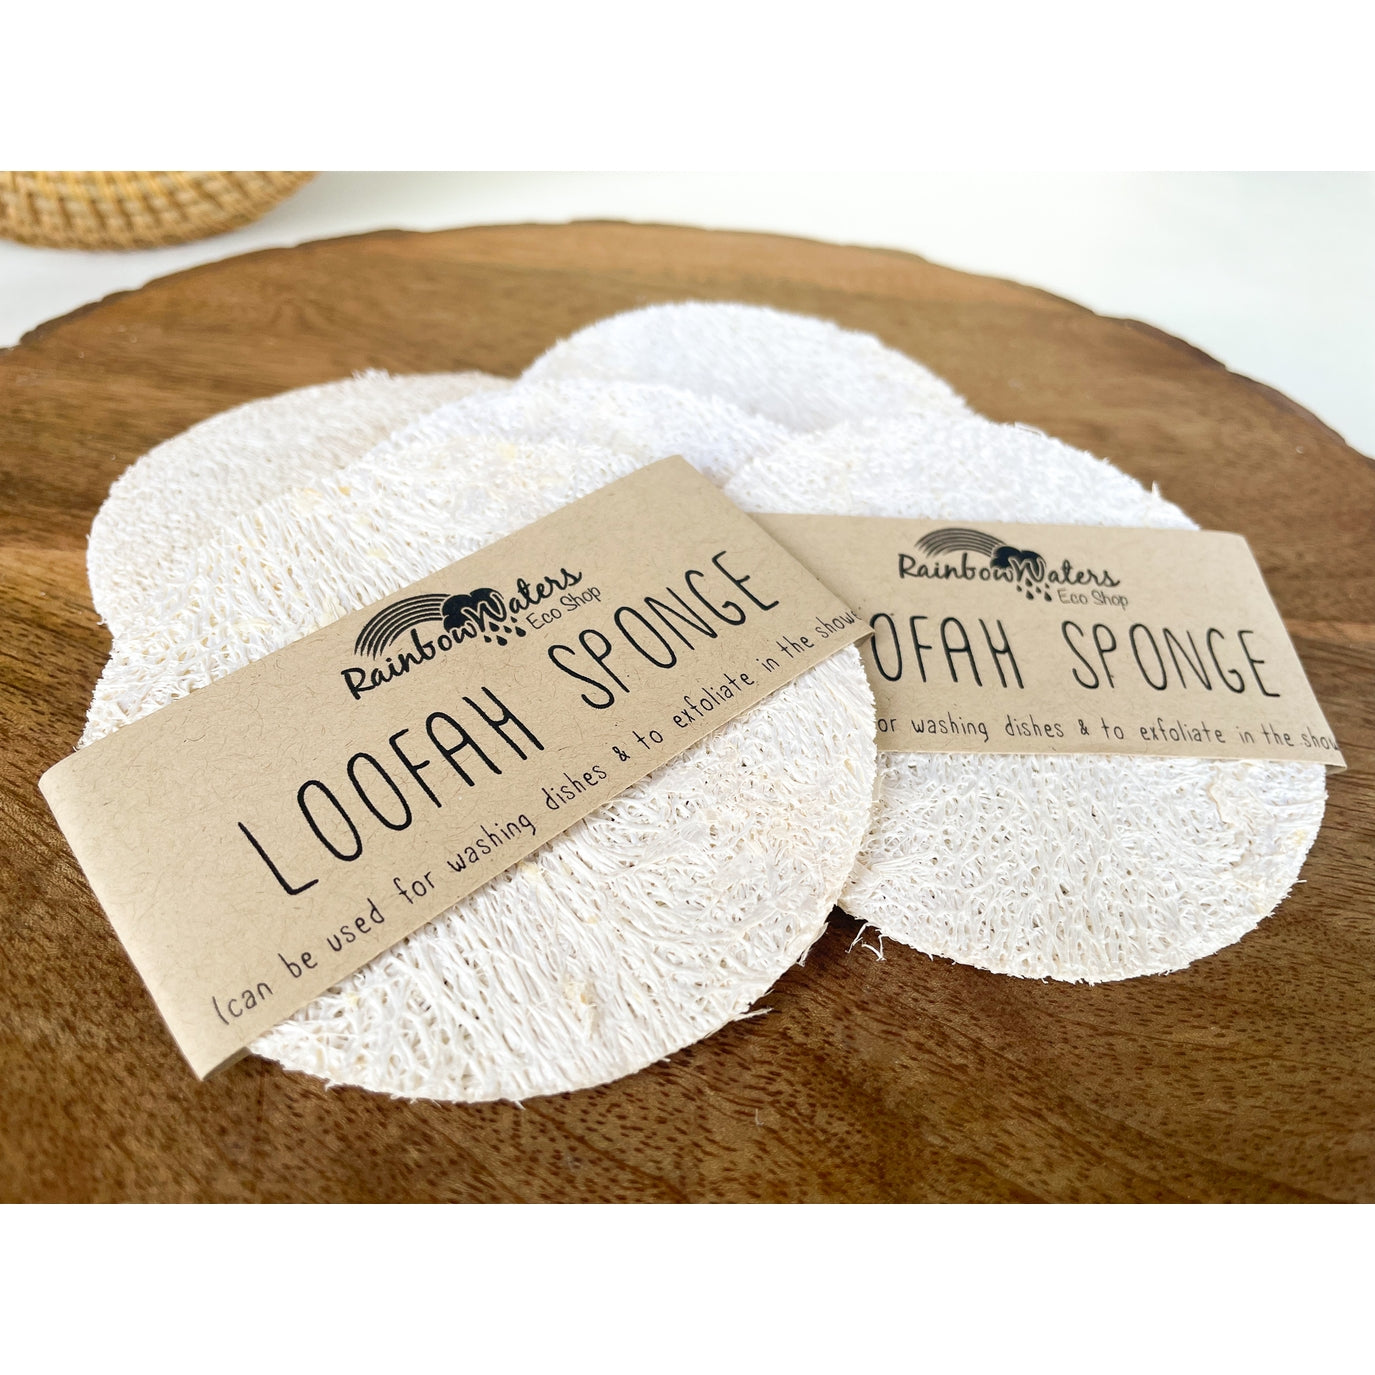 Loofah sponges